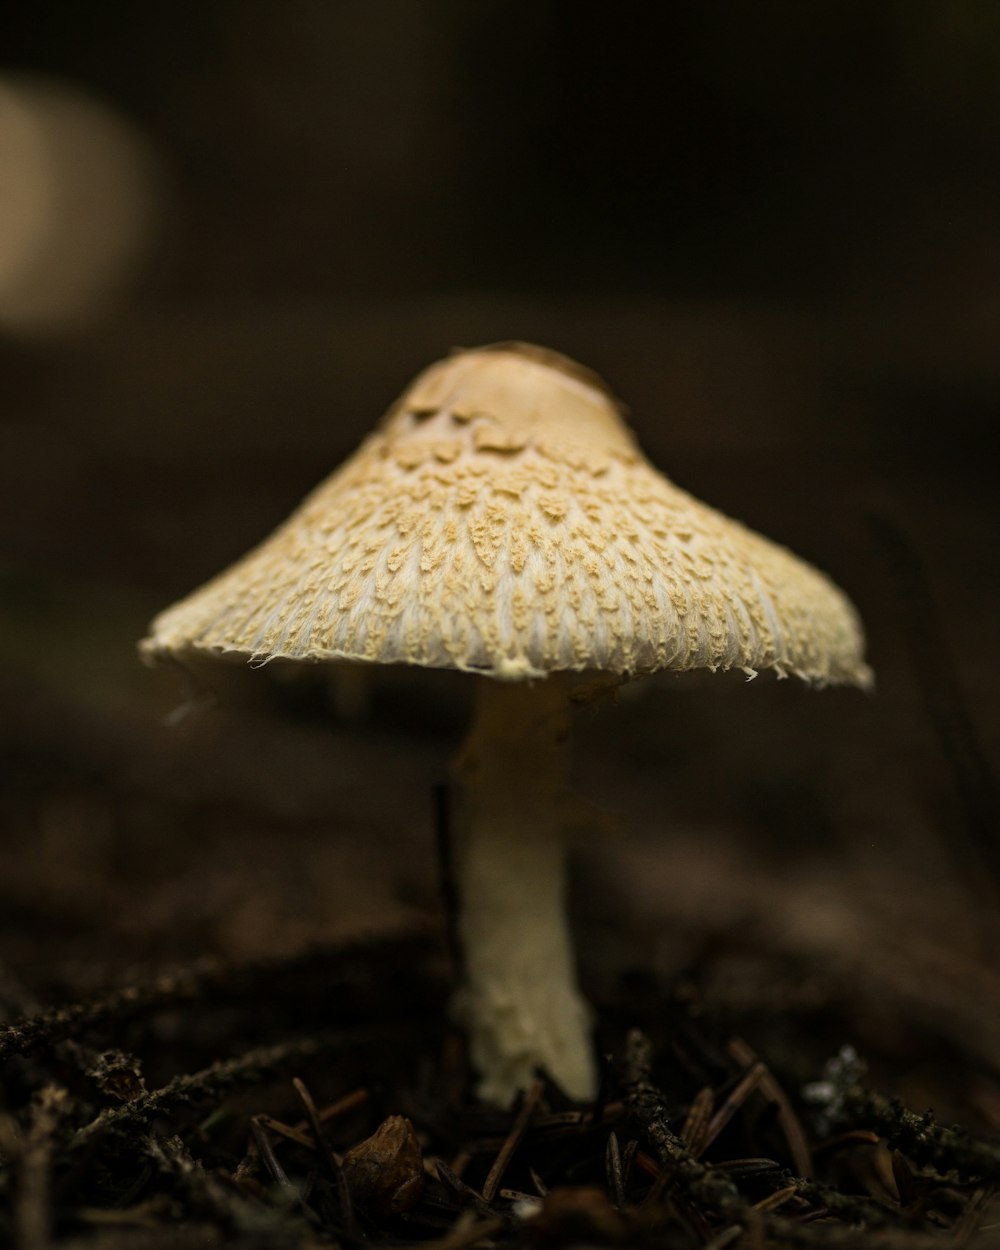 white mushroom in close-up photo